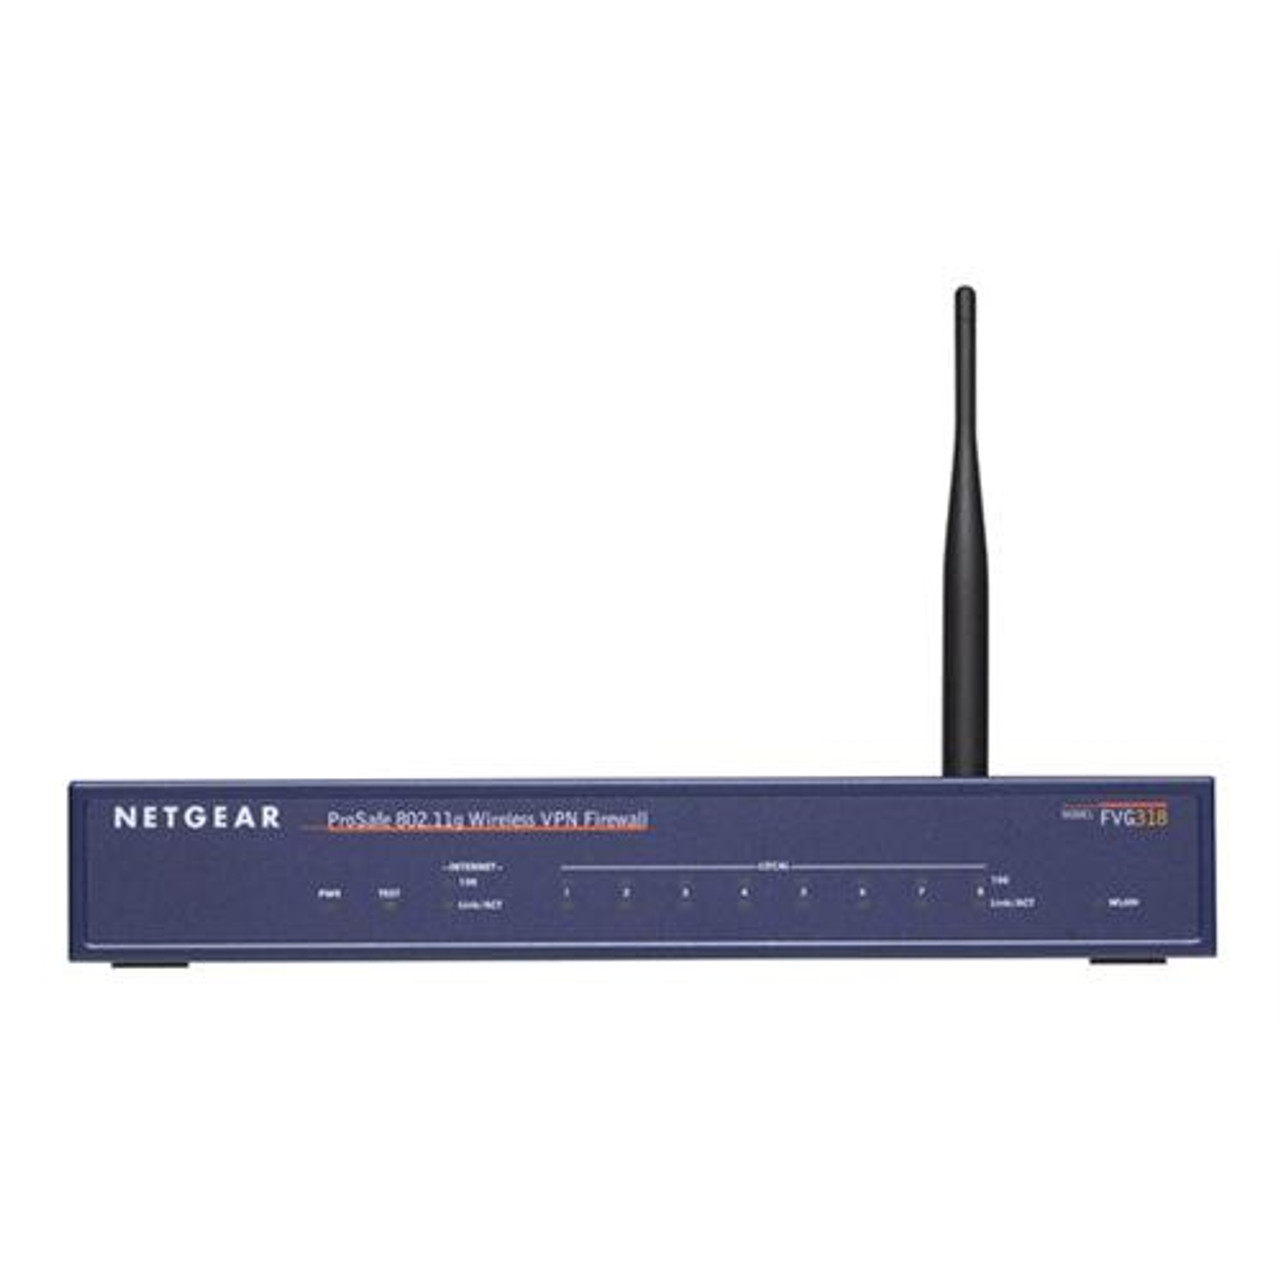 FVG318-100NAR NetGear ProSafe 802.11 Wireless VPN Firewall 8 With 8-Ports 10/100Mbps Switch (Refurbished)